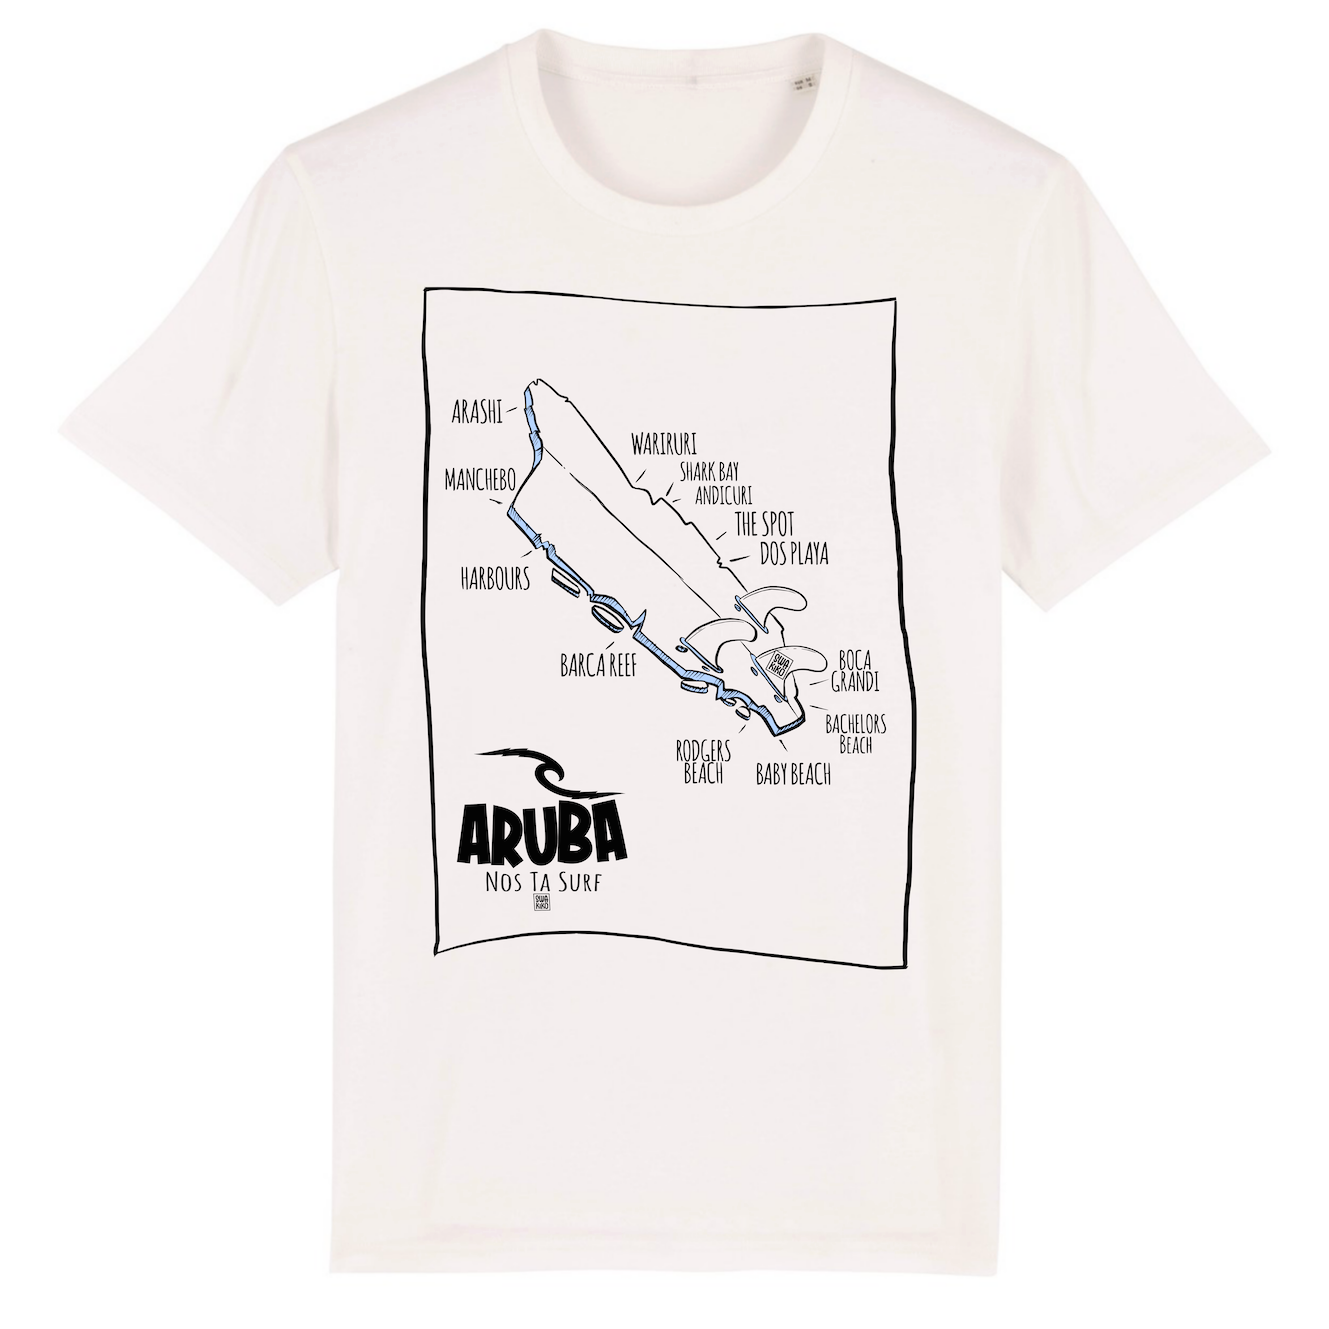 Aruba Surfboard T-shirt, men white